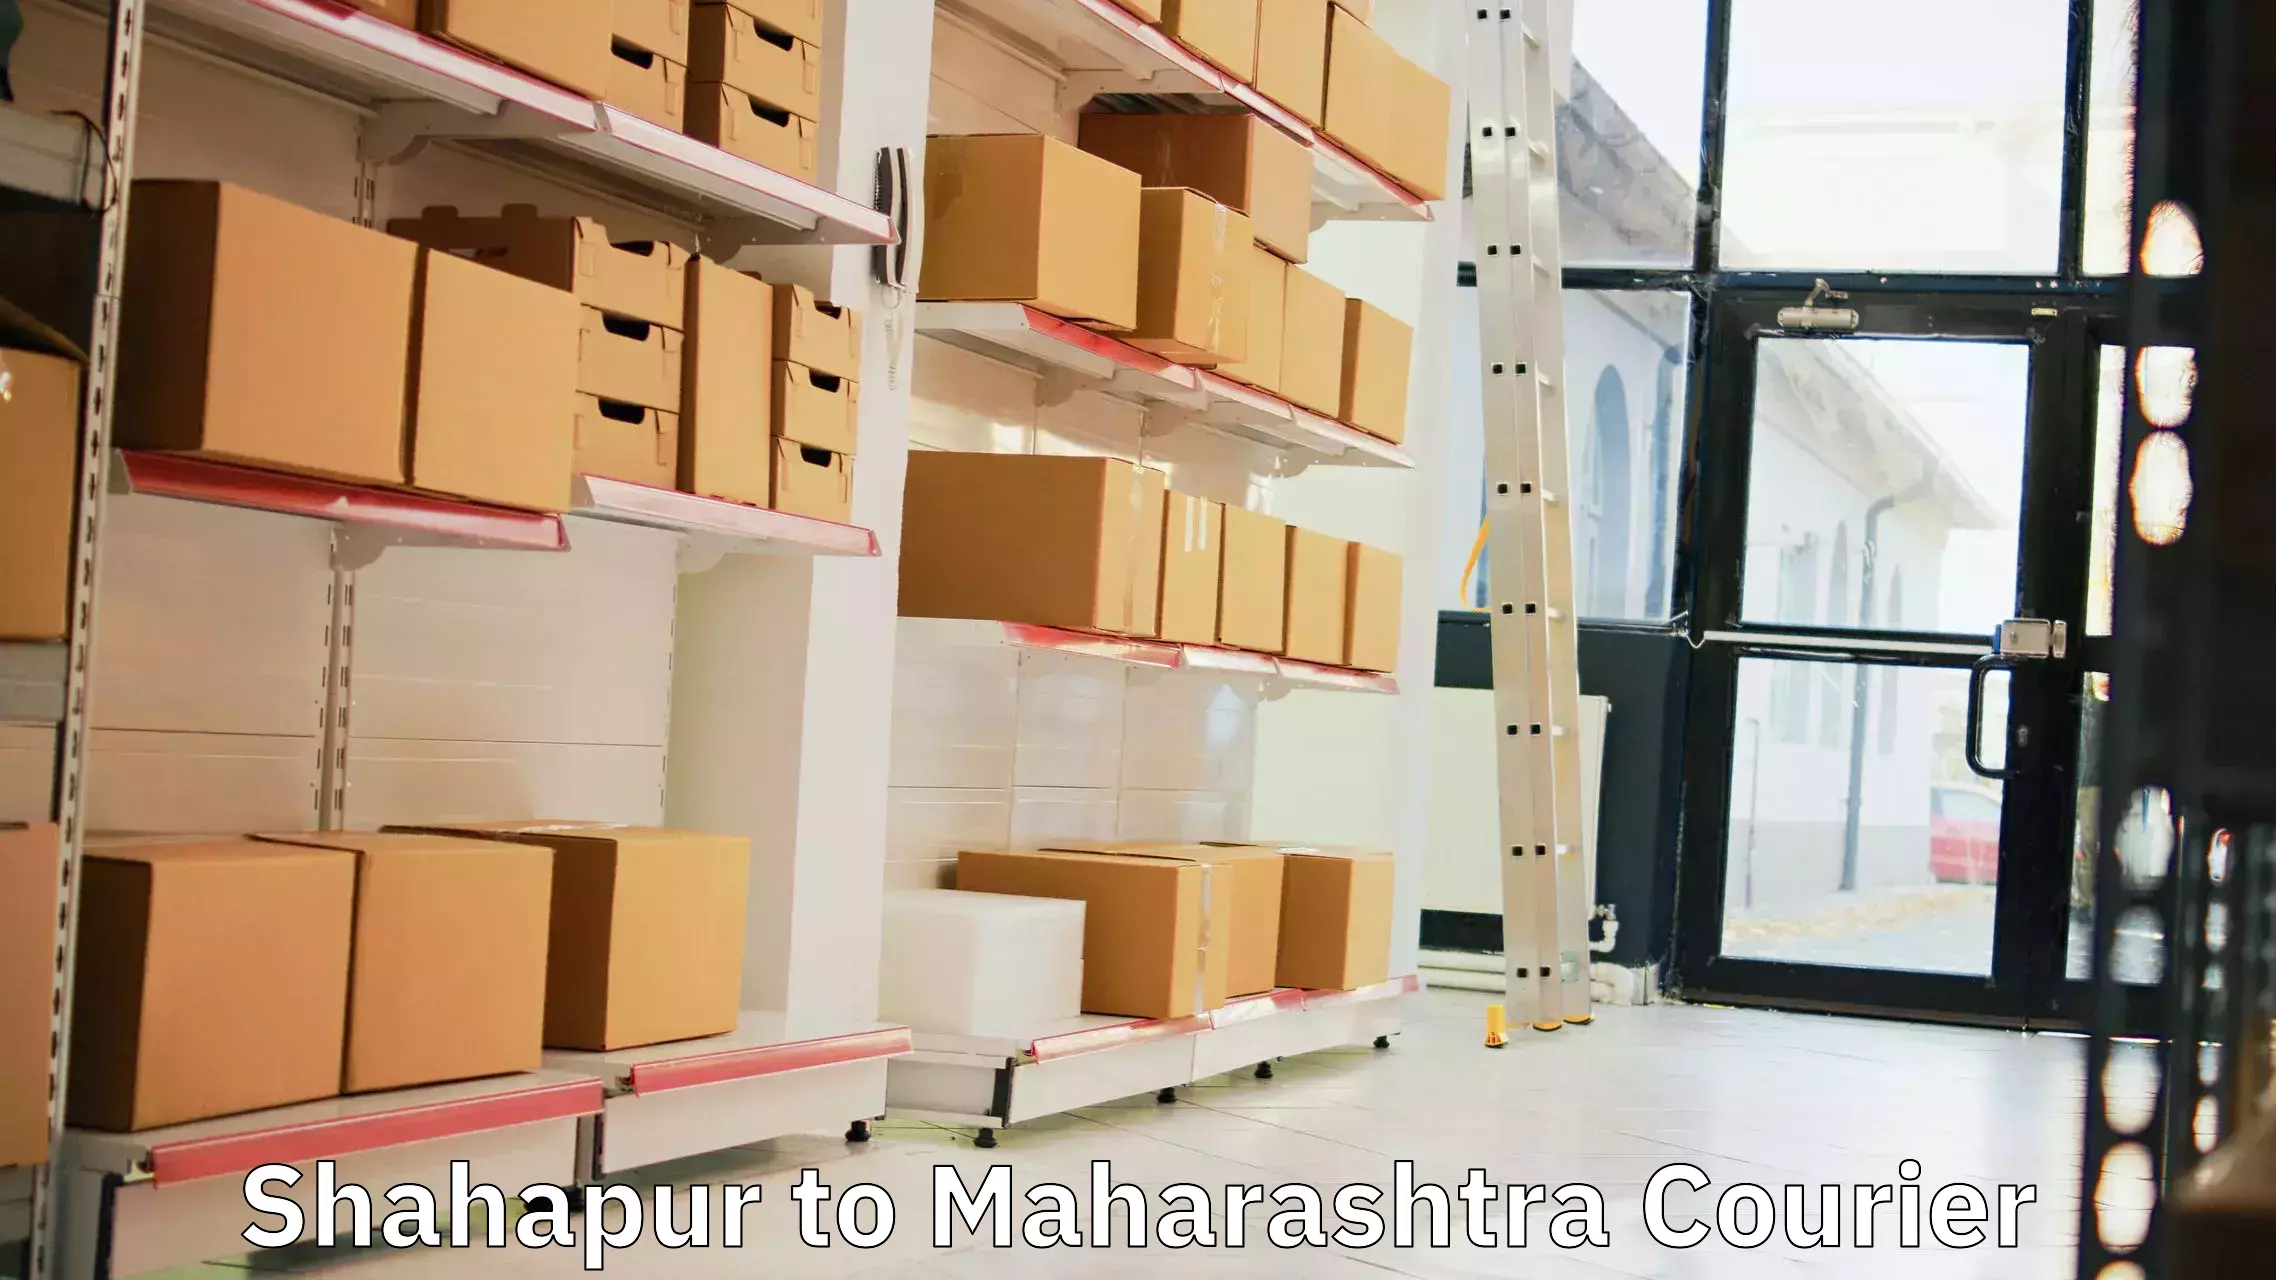 Easy access courier services Shahapur to Shrivardhan